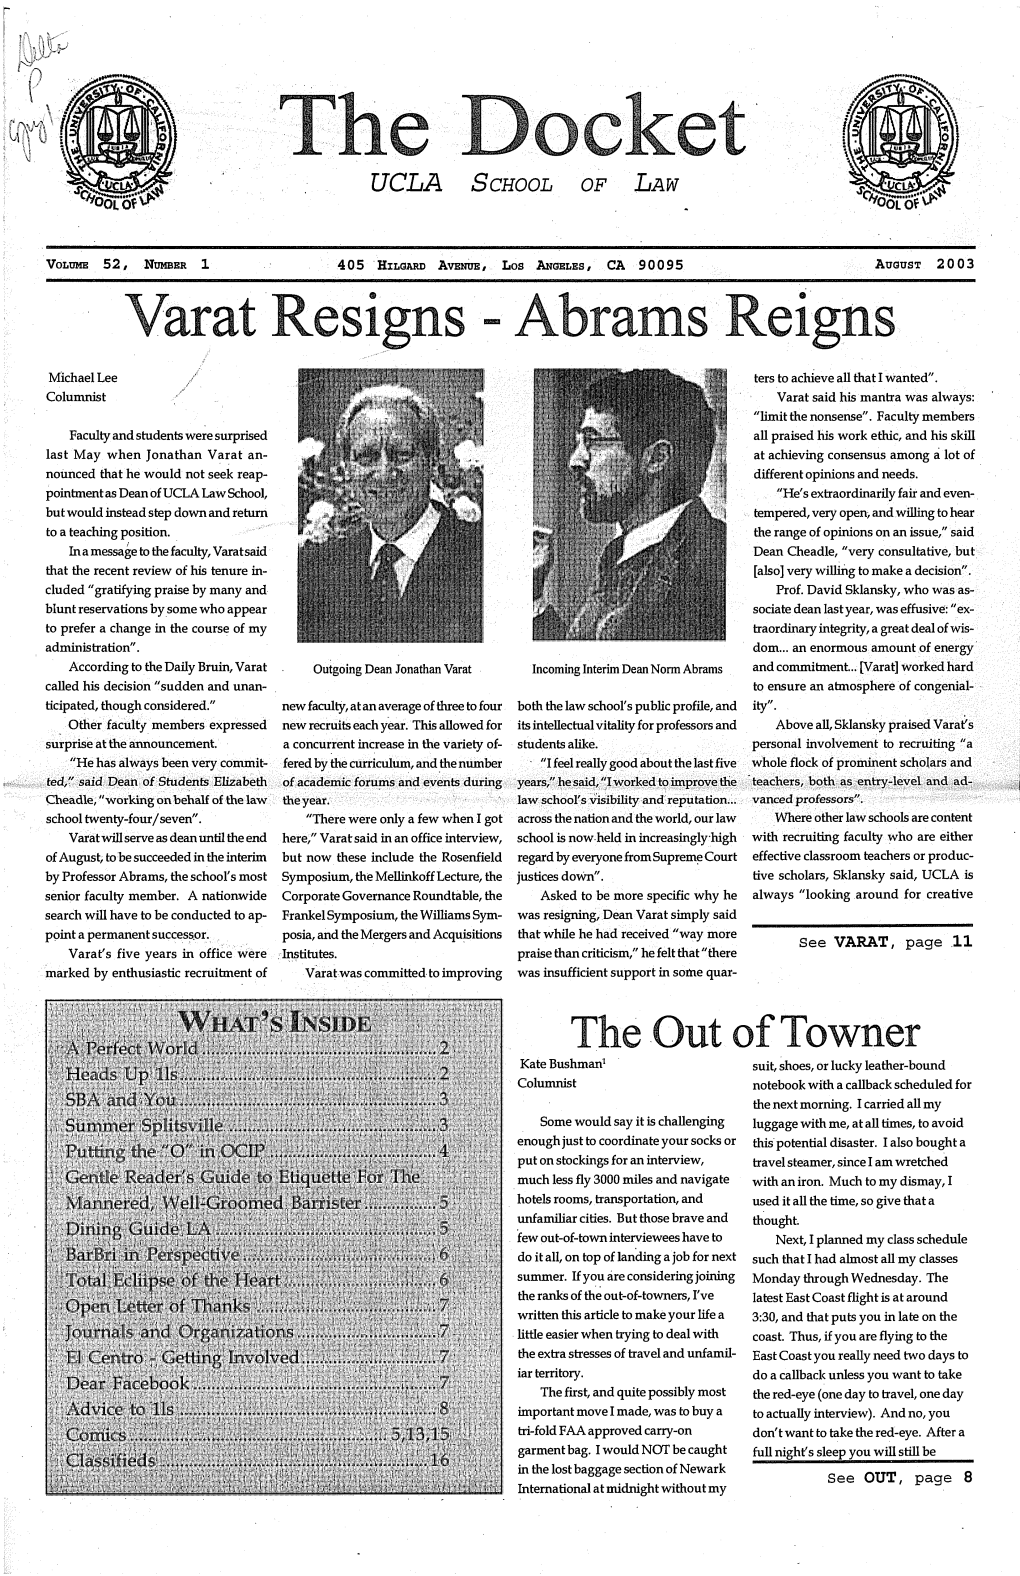 Varat Resigns - Abrams Reigns